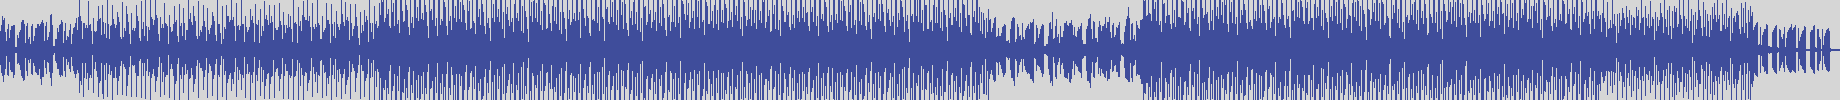 nf_boyz_records [NFY048] Bungle Run - Inverter [Blue Feeling Mix] audio wave form